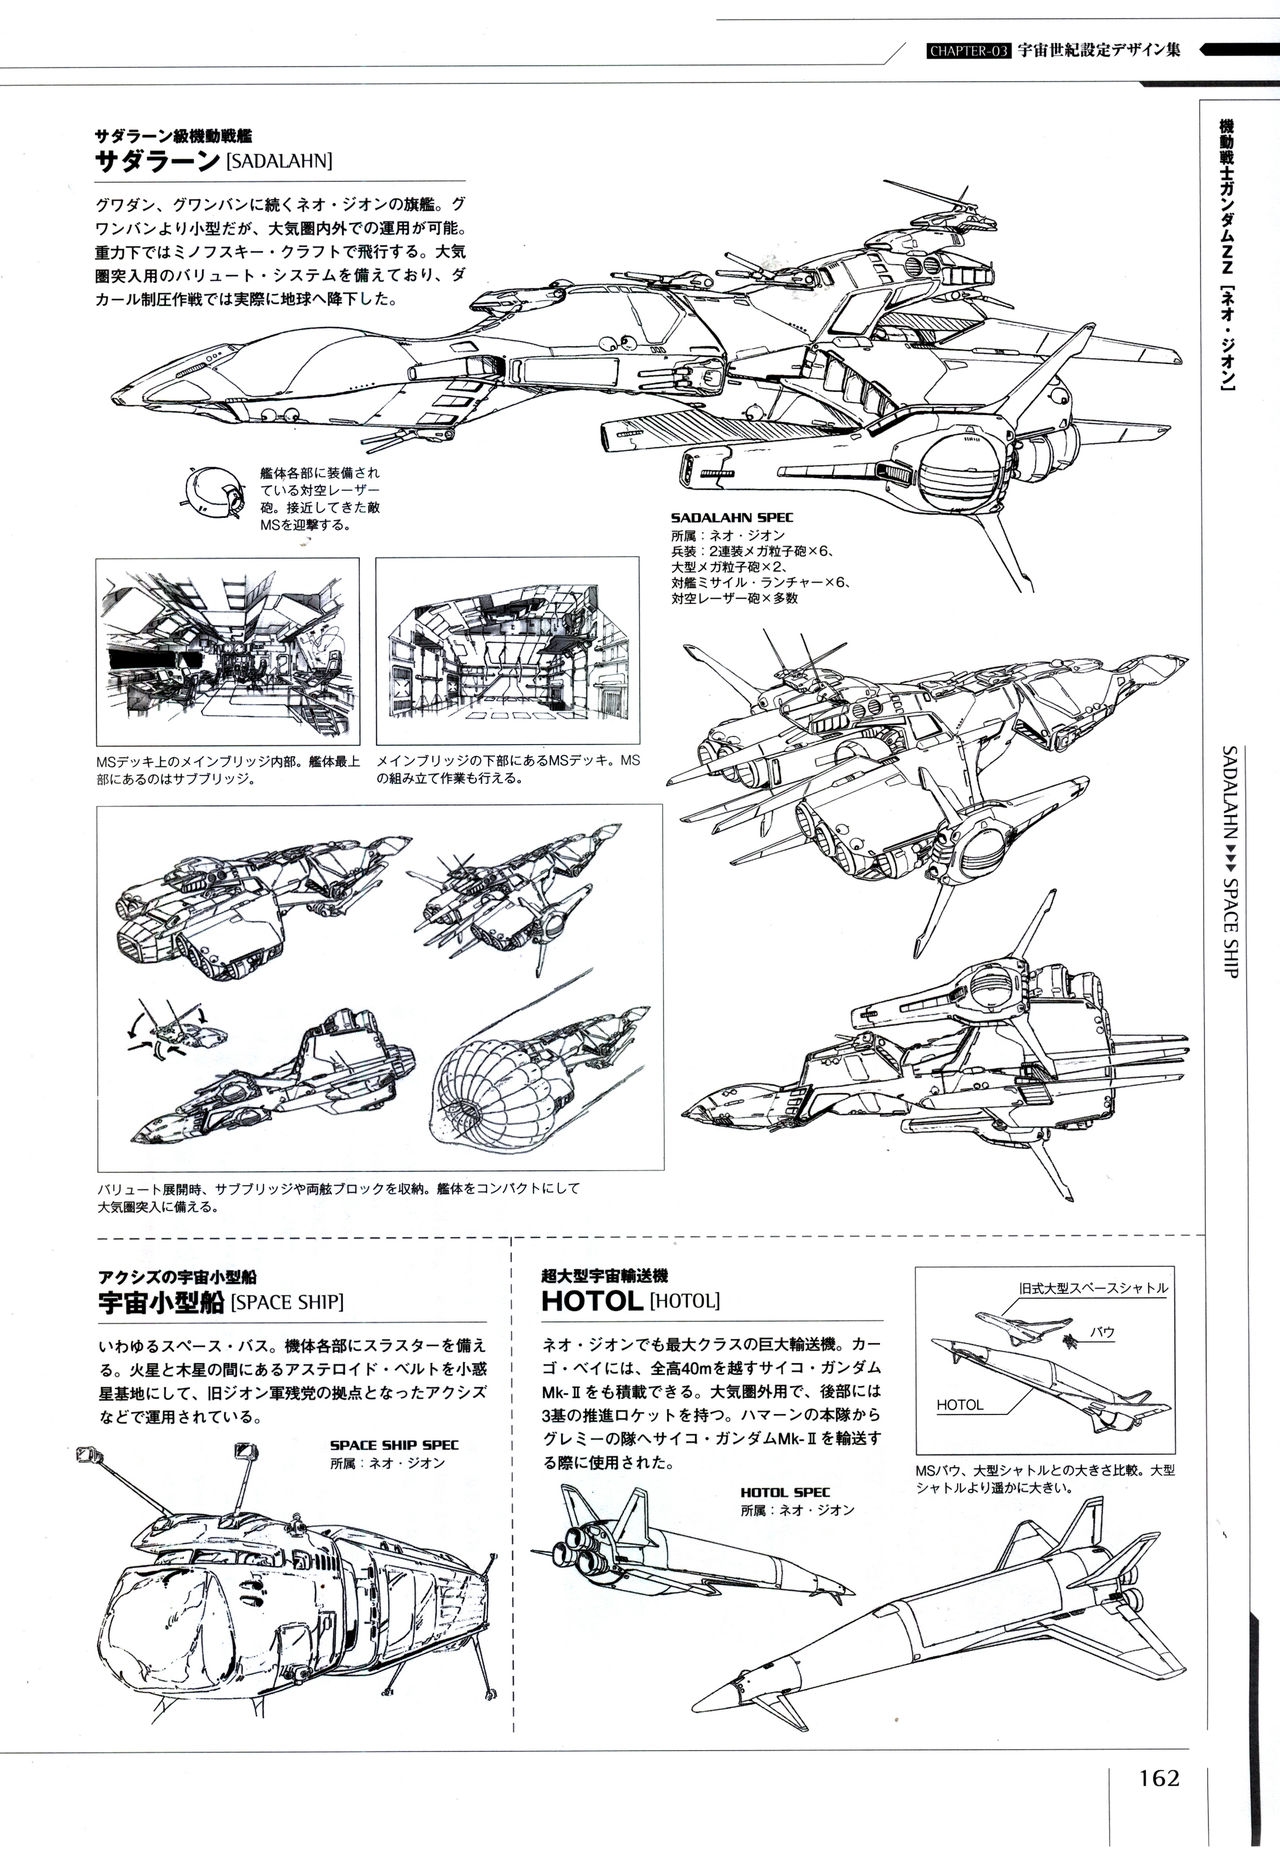 Mobile Suit Gundam - Ship & Aerospace Plane Encyclopedia - Revised Edition 167